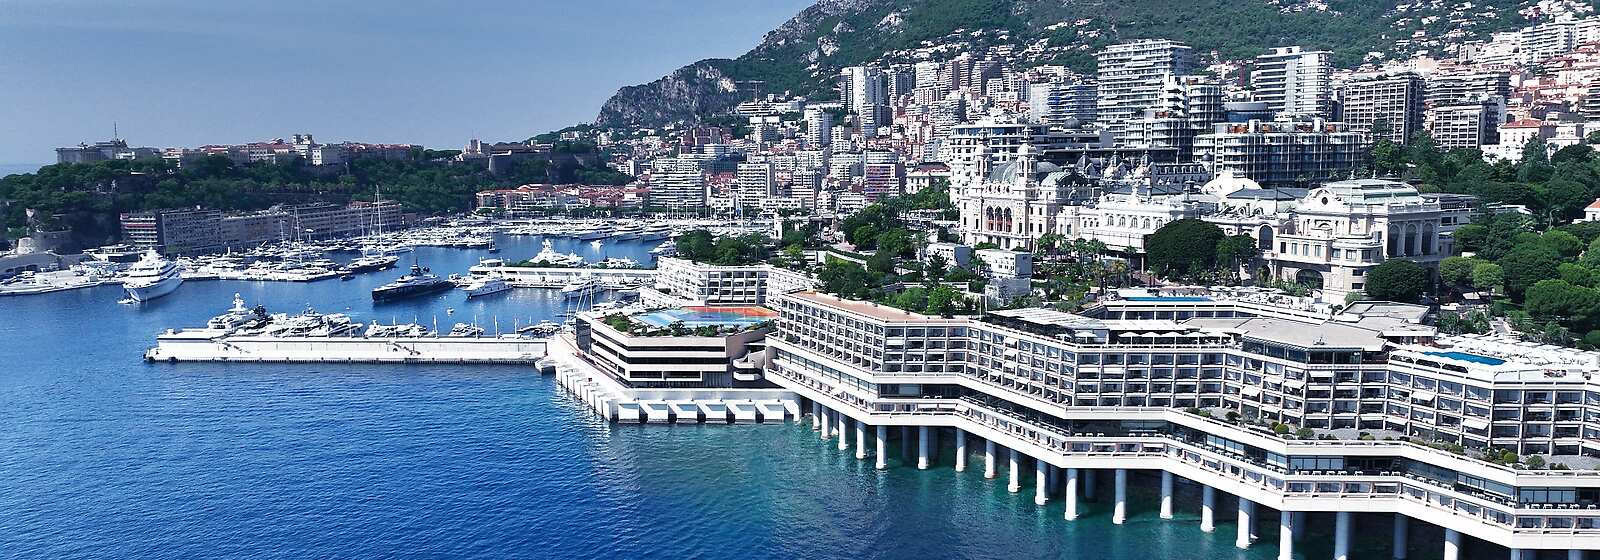 Fairmont Monte Carlo aerial view